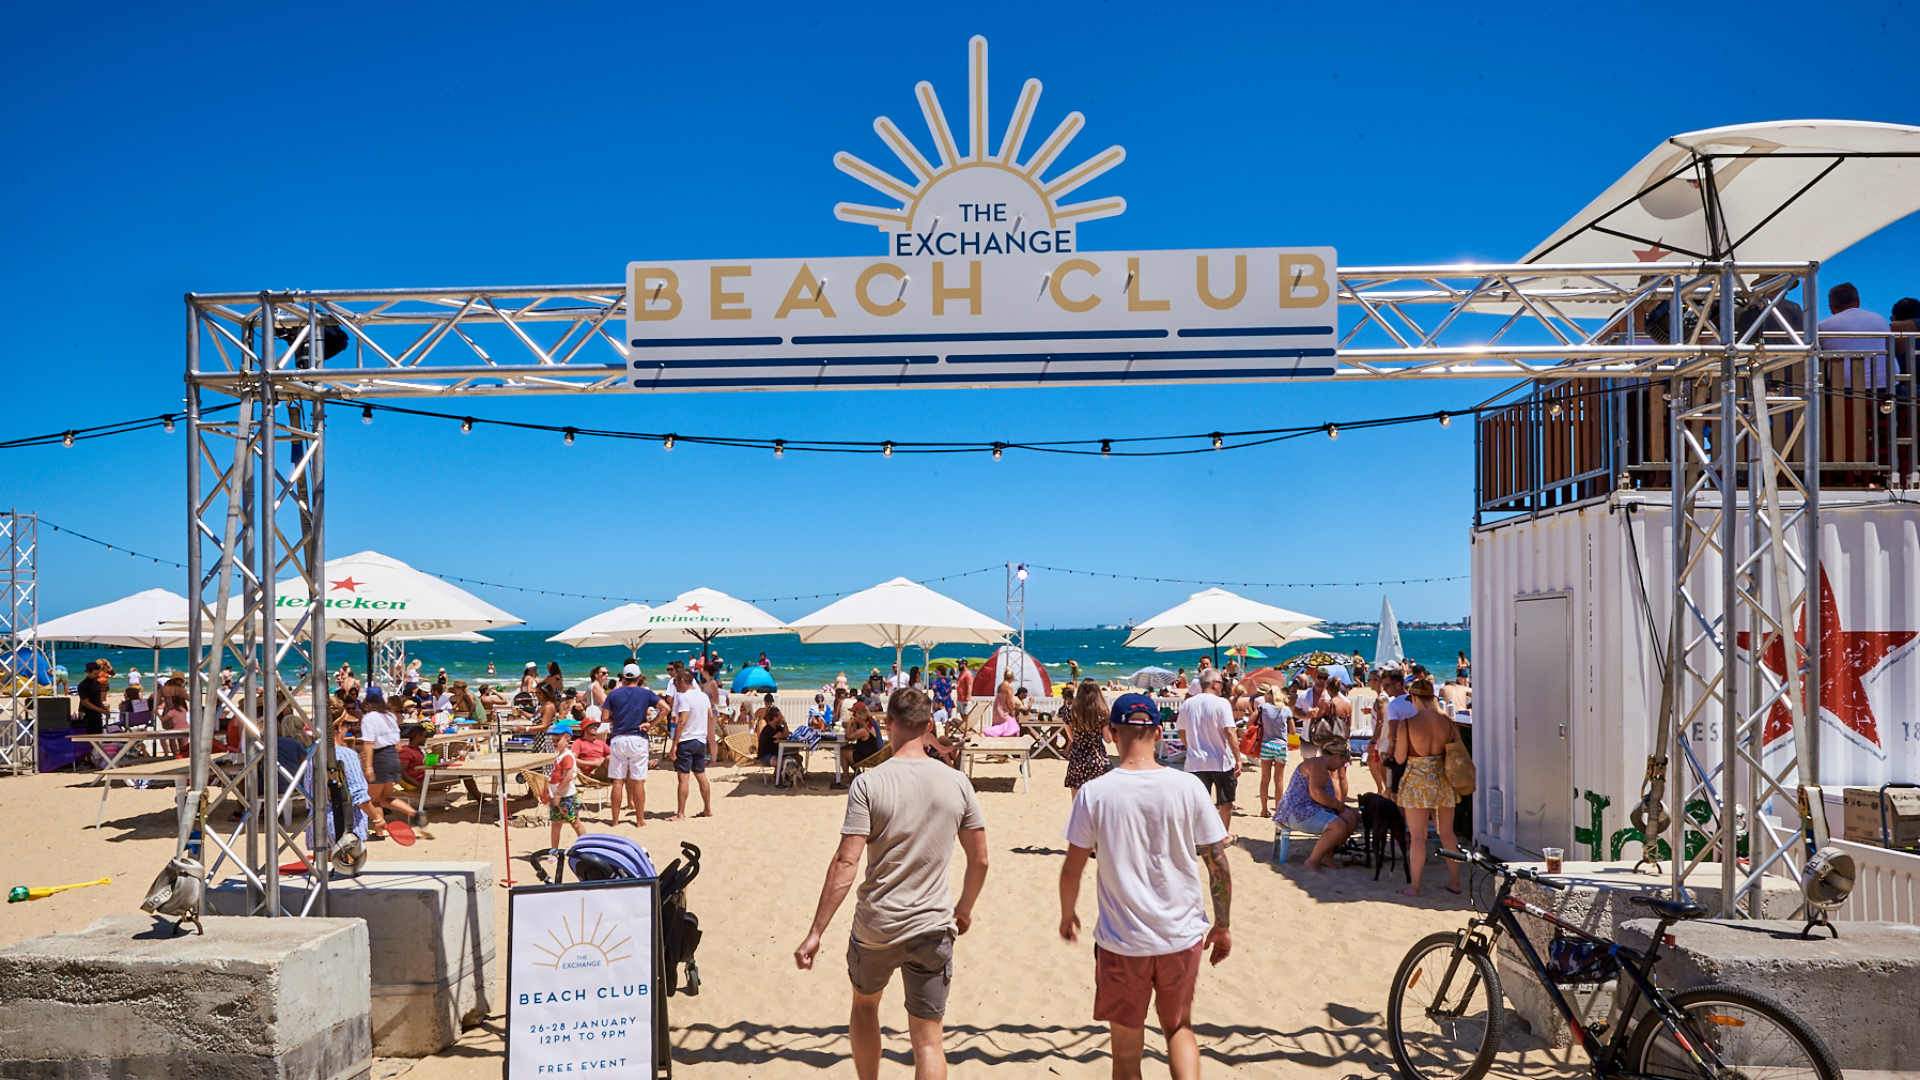 The Exchange Beach Club 2020–21